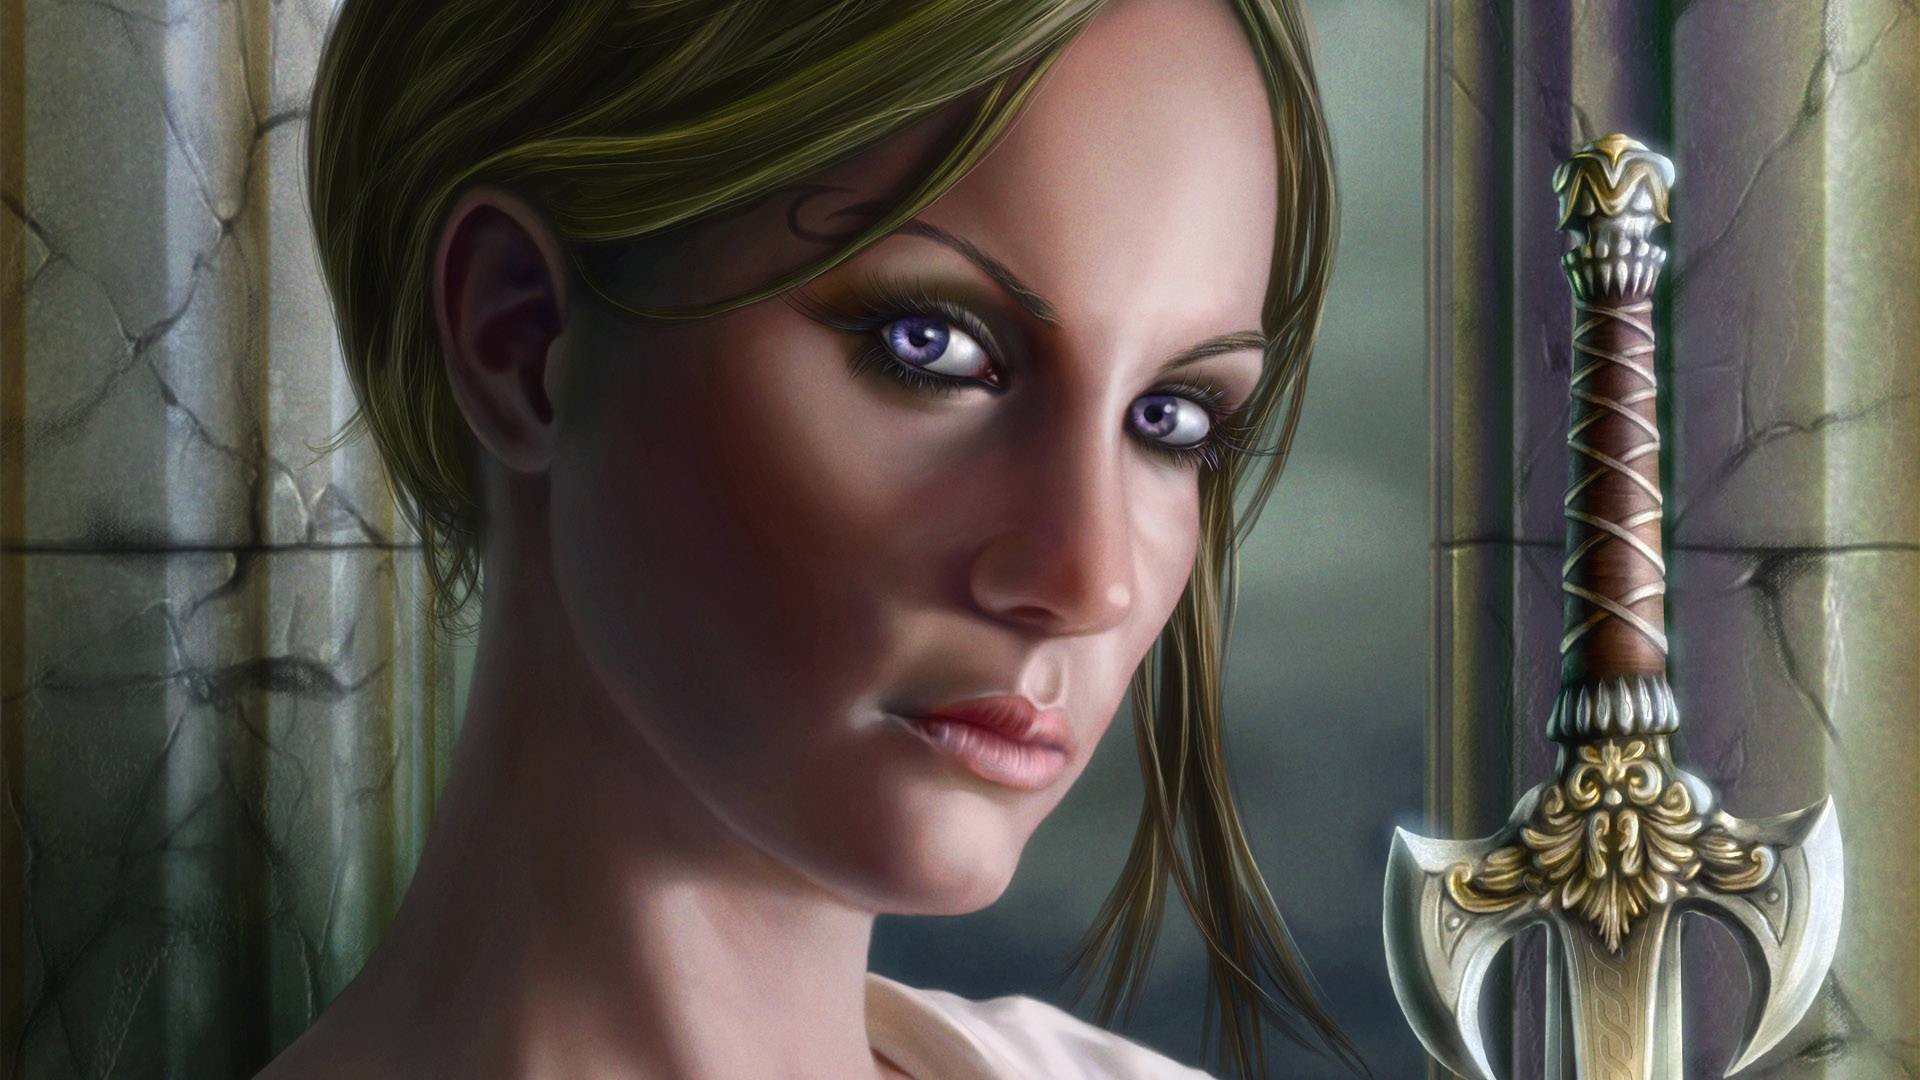 General 1920x1080 fantasy art face women sword artwork makeup purple eyes closeup looking at viewer